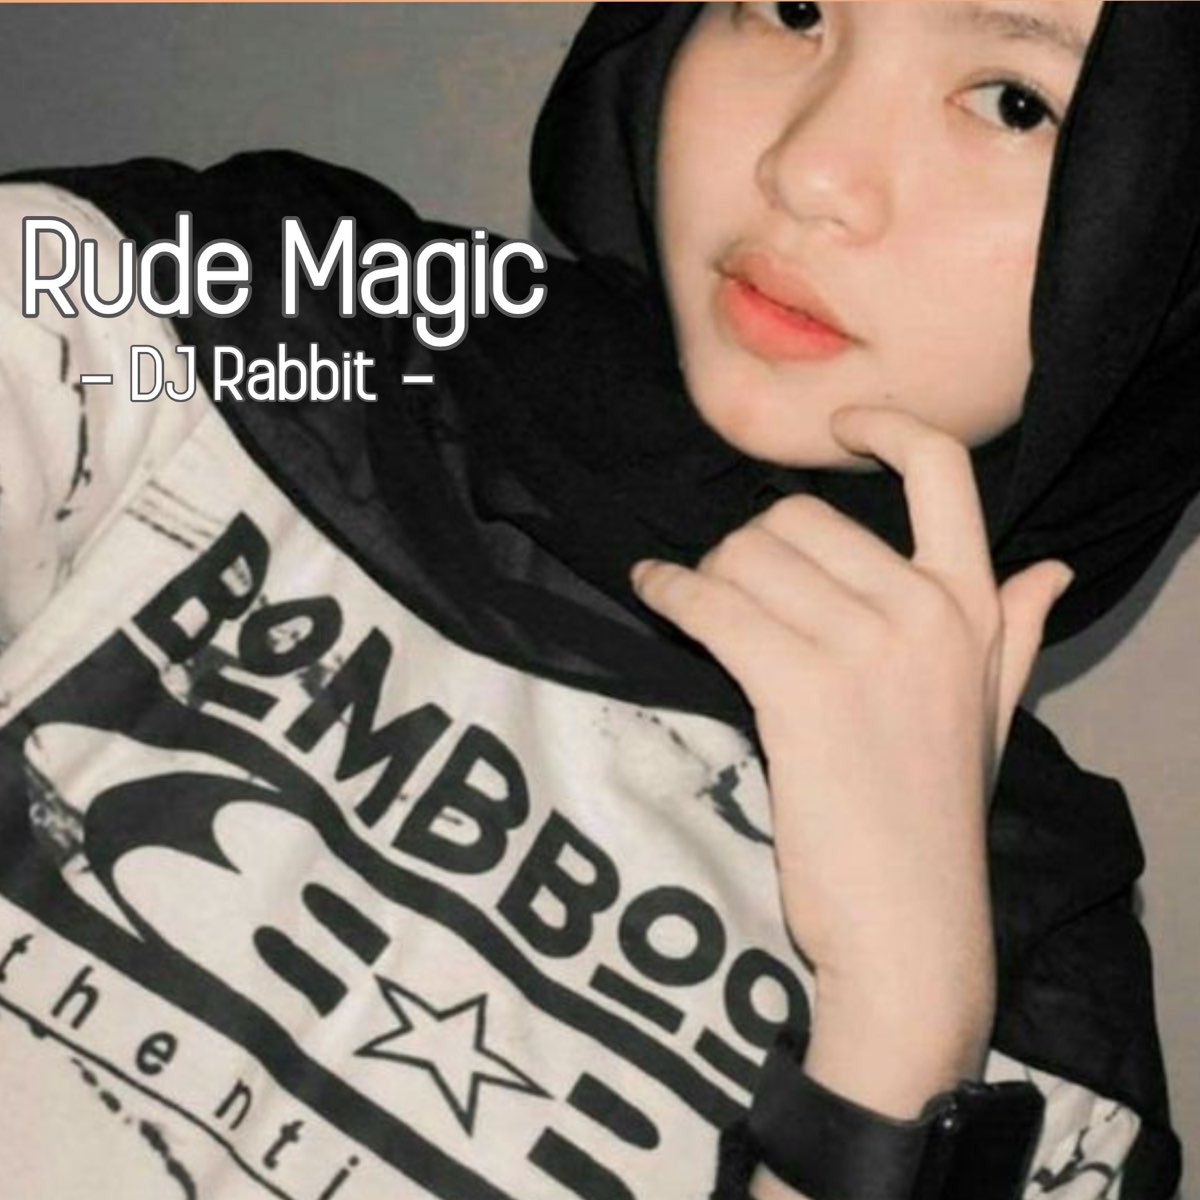 Magic's rude. Rude Magic. DJ Rabbit.